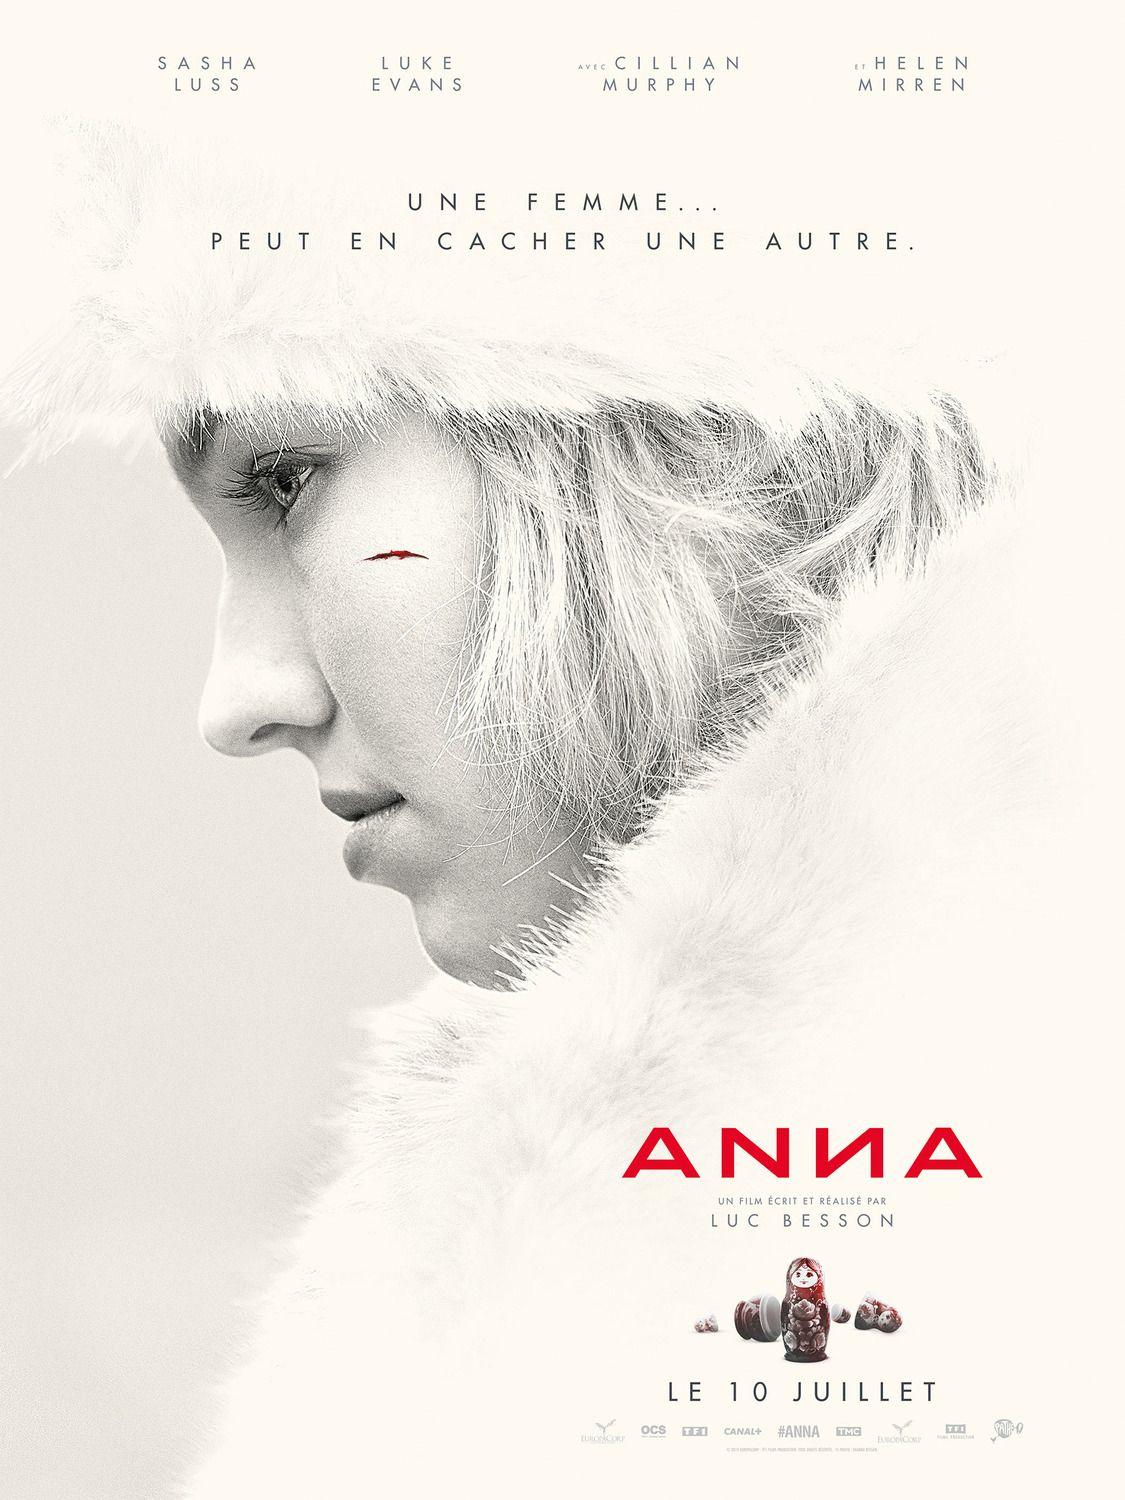 First Poster For Action Thriller 'Anna' Sasha Luss Luke